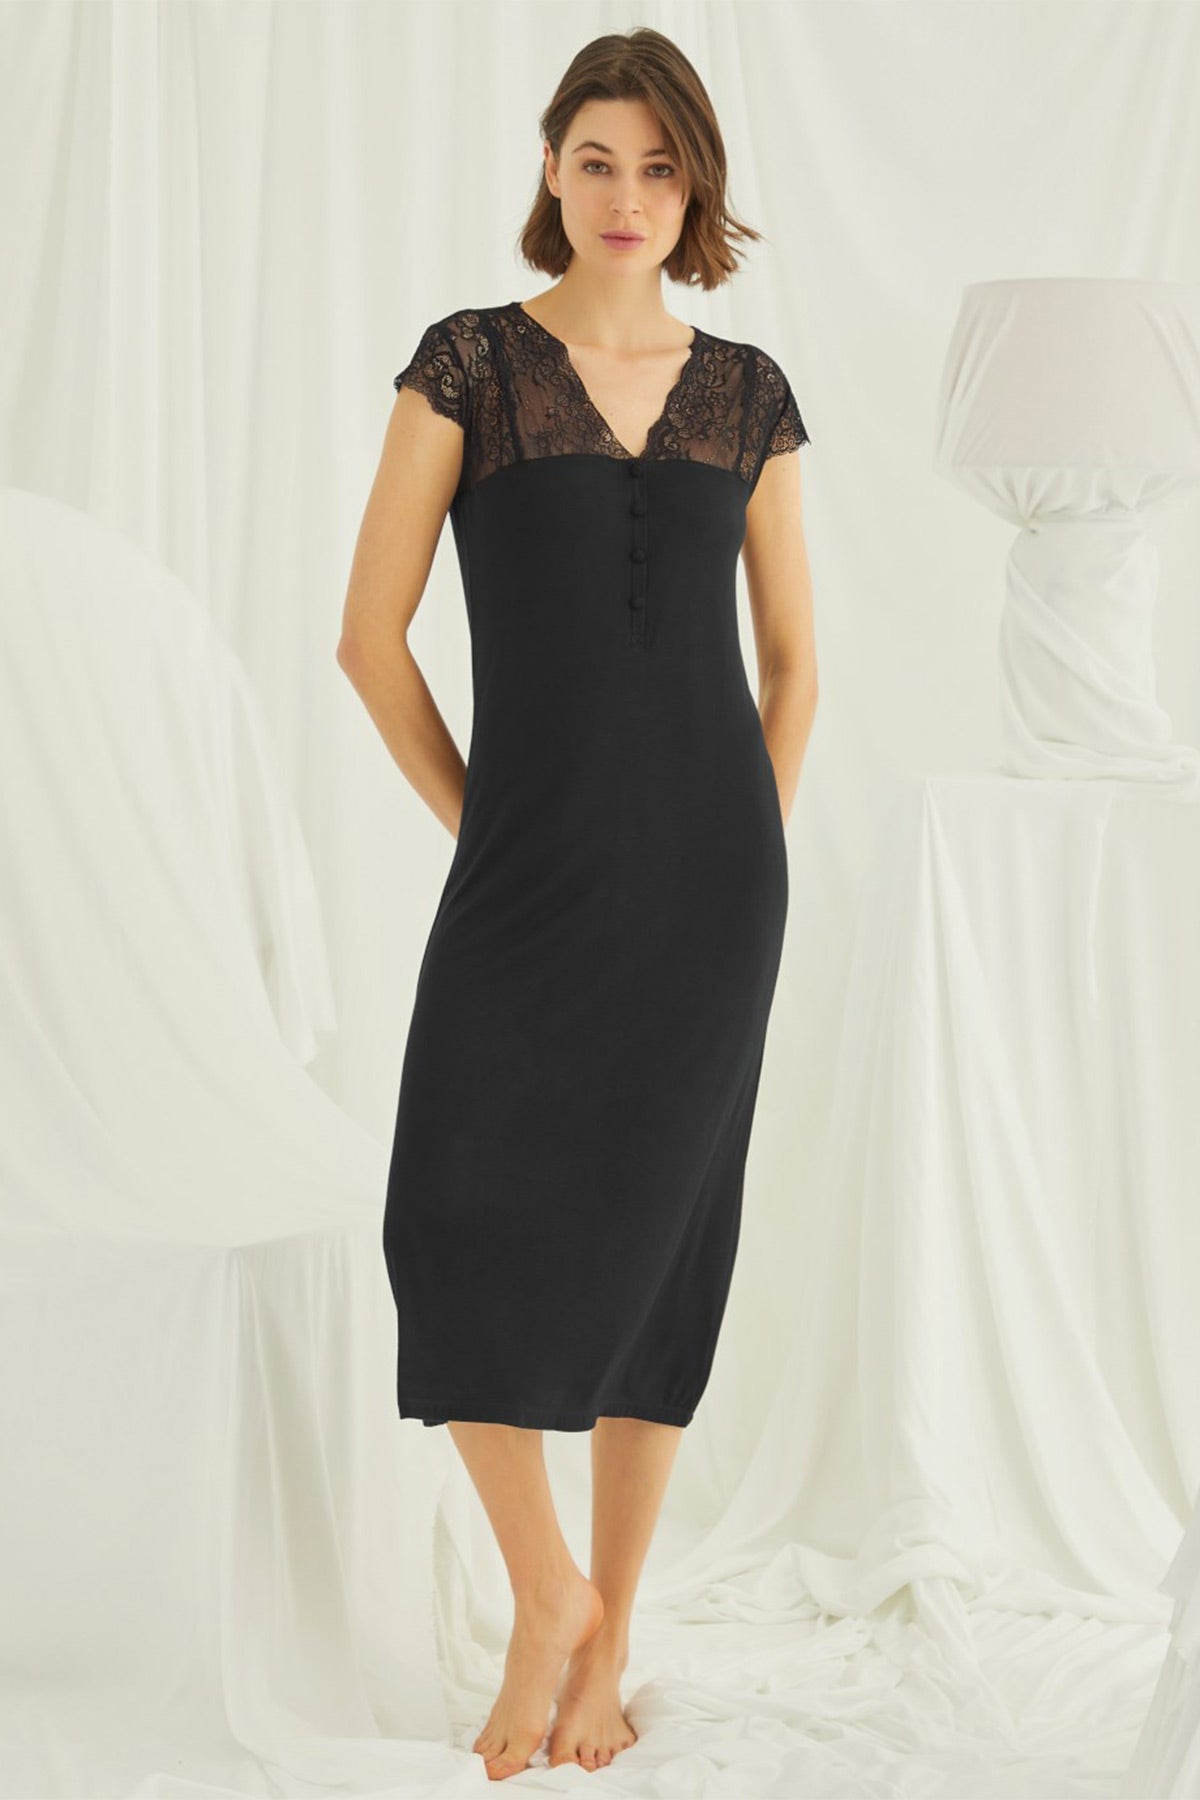 Shopymommy 18457 Lace V-Neck Plus Size Maternity & Nursing Nightgown Black